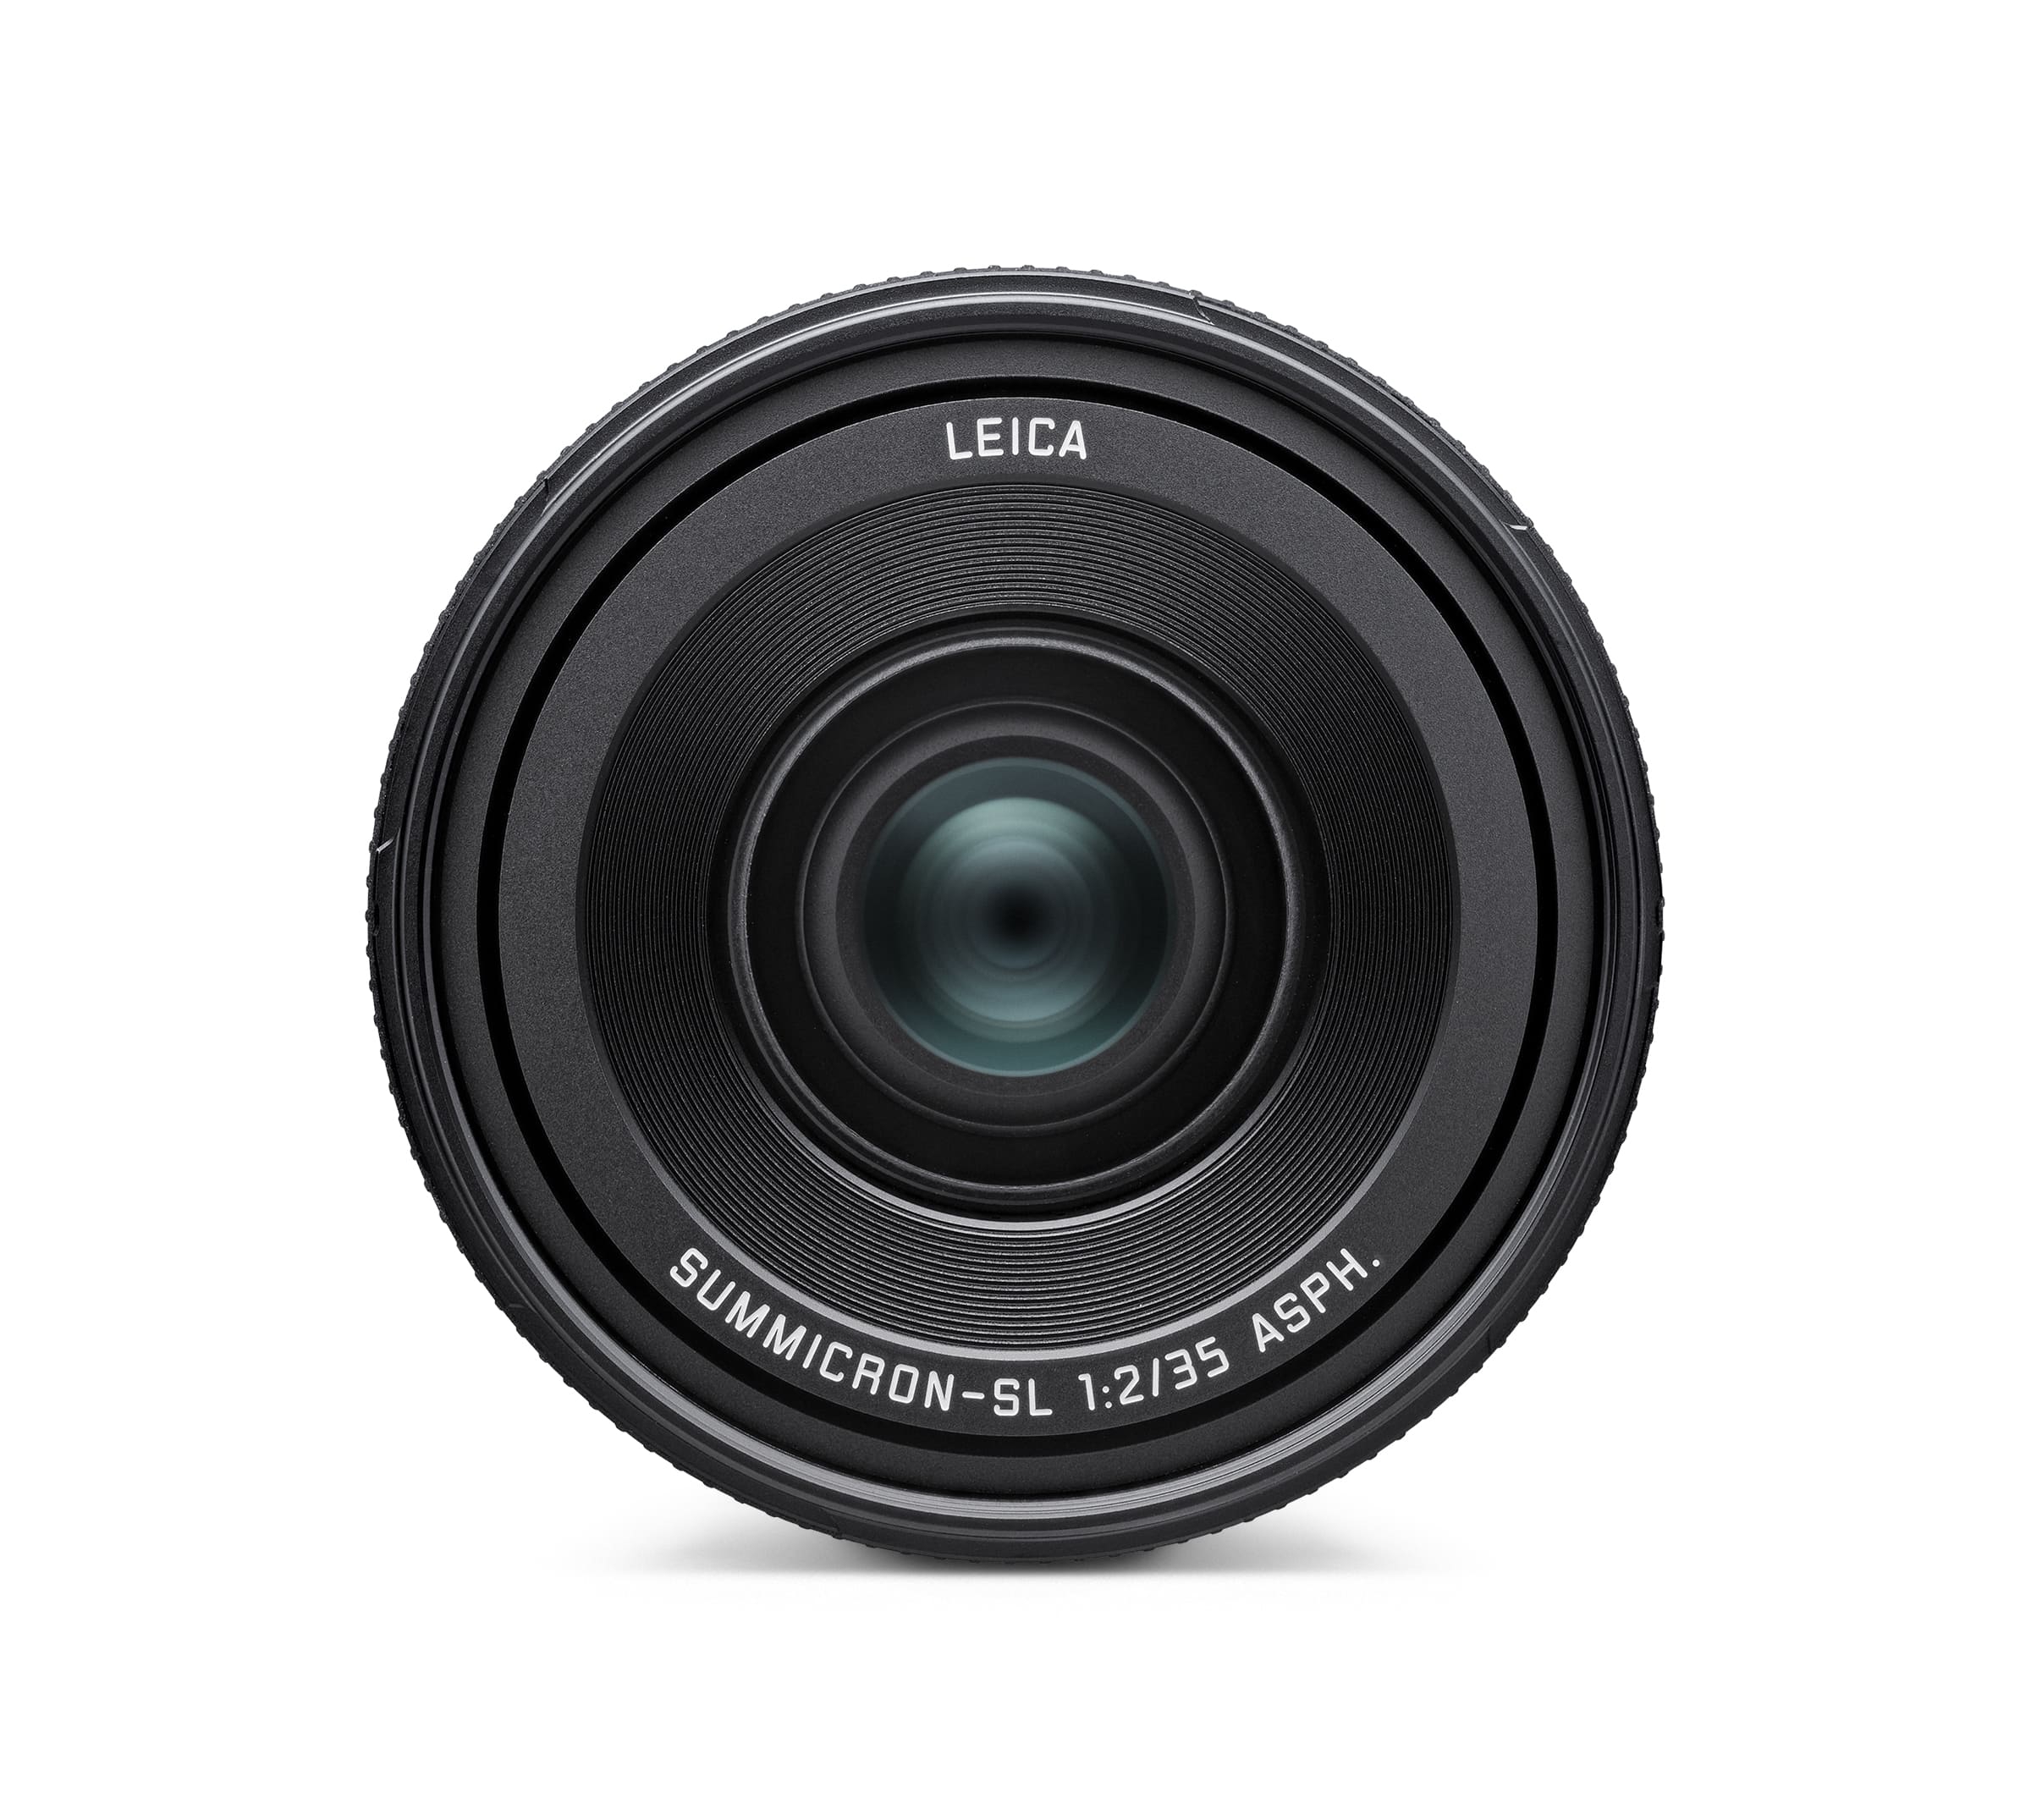 LEICA SL2-S schwarz 10880 + LEICA SUMMICRON-SL 35mm 1:2 ASPH. schwarz